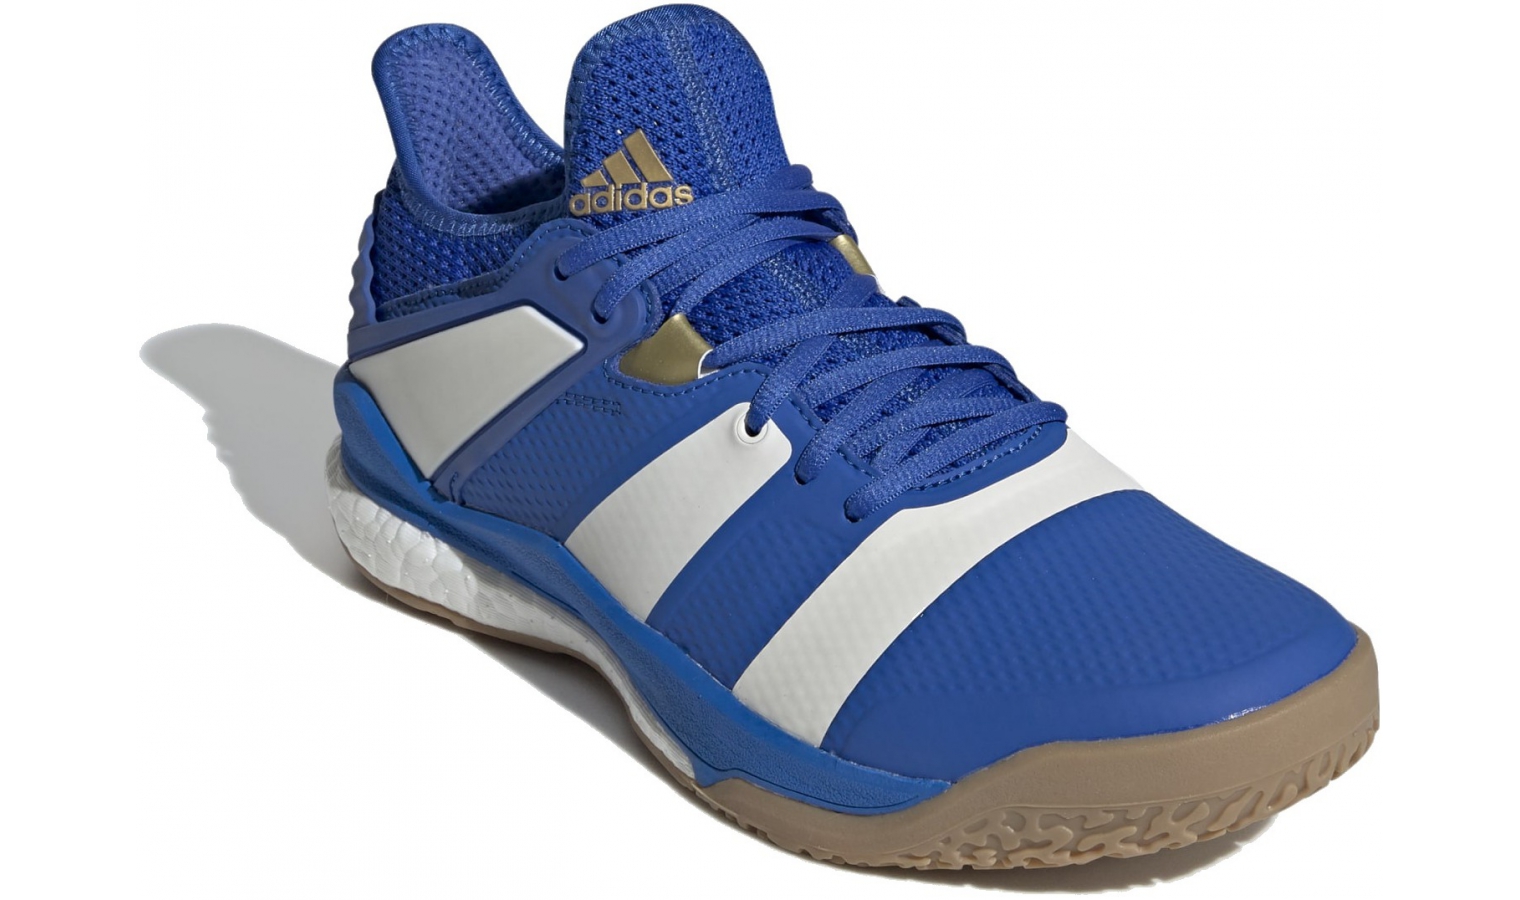 Men's handball shoes adidas STABIL X blue | AD Sport.store